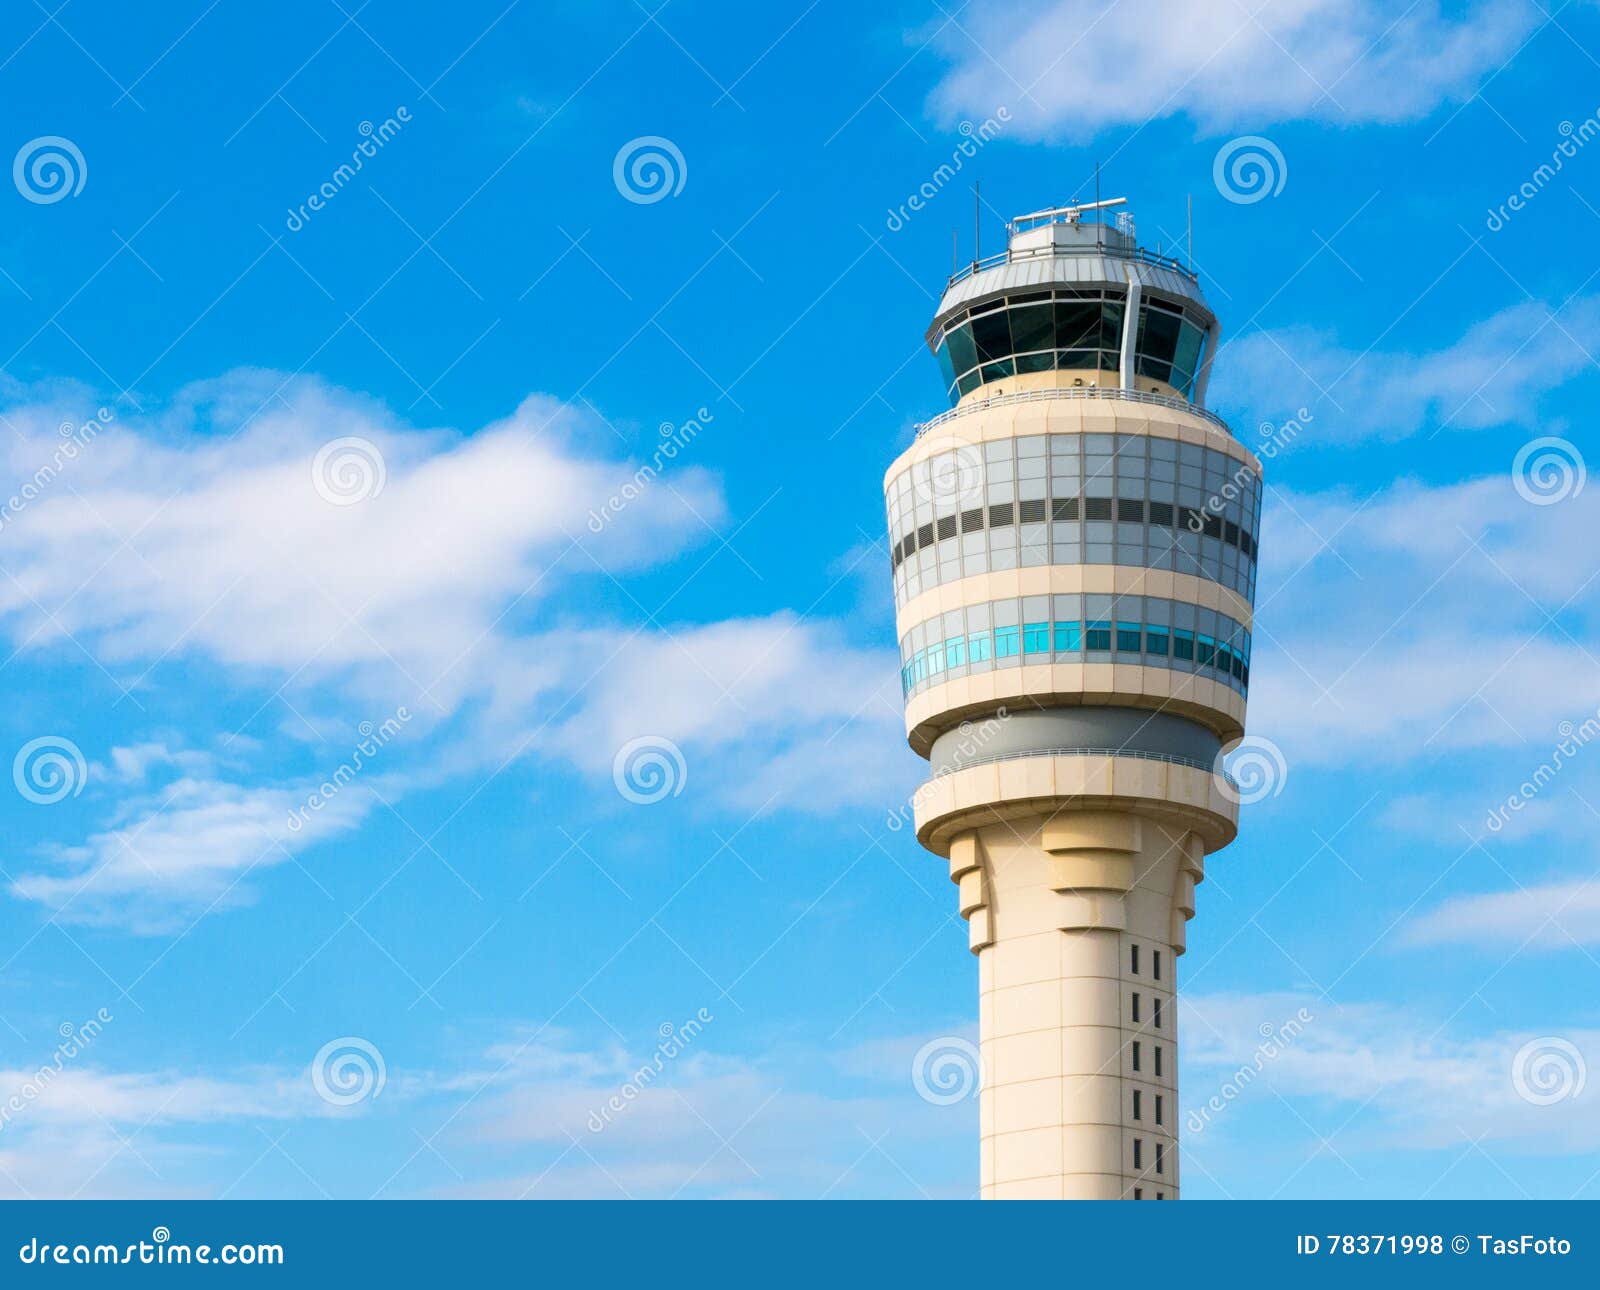 ATL - Atlanta Hartsfield Jackson International Airport